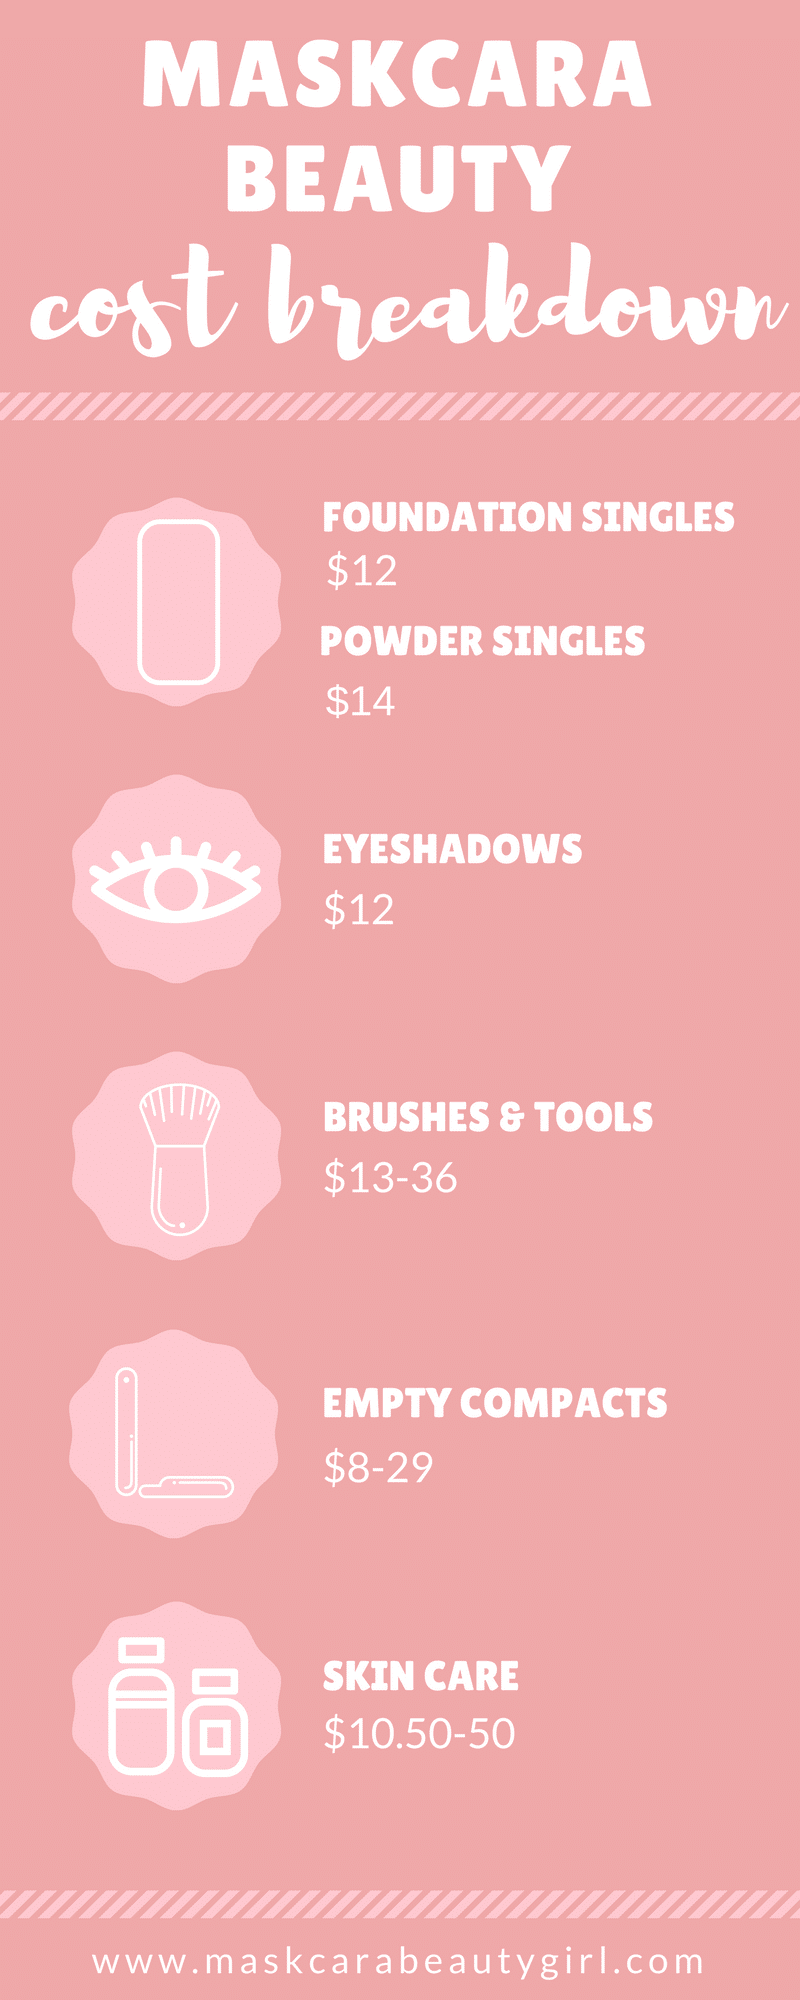 Maskcara Makeup Prices at www.maskcarabeautygirl.com, see how much Maskcara makeup products cost!